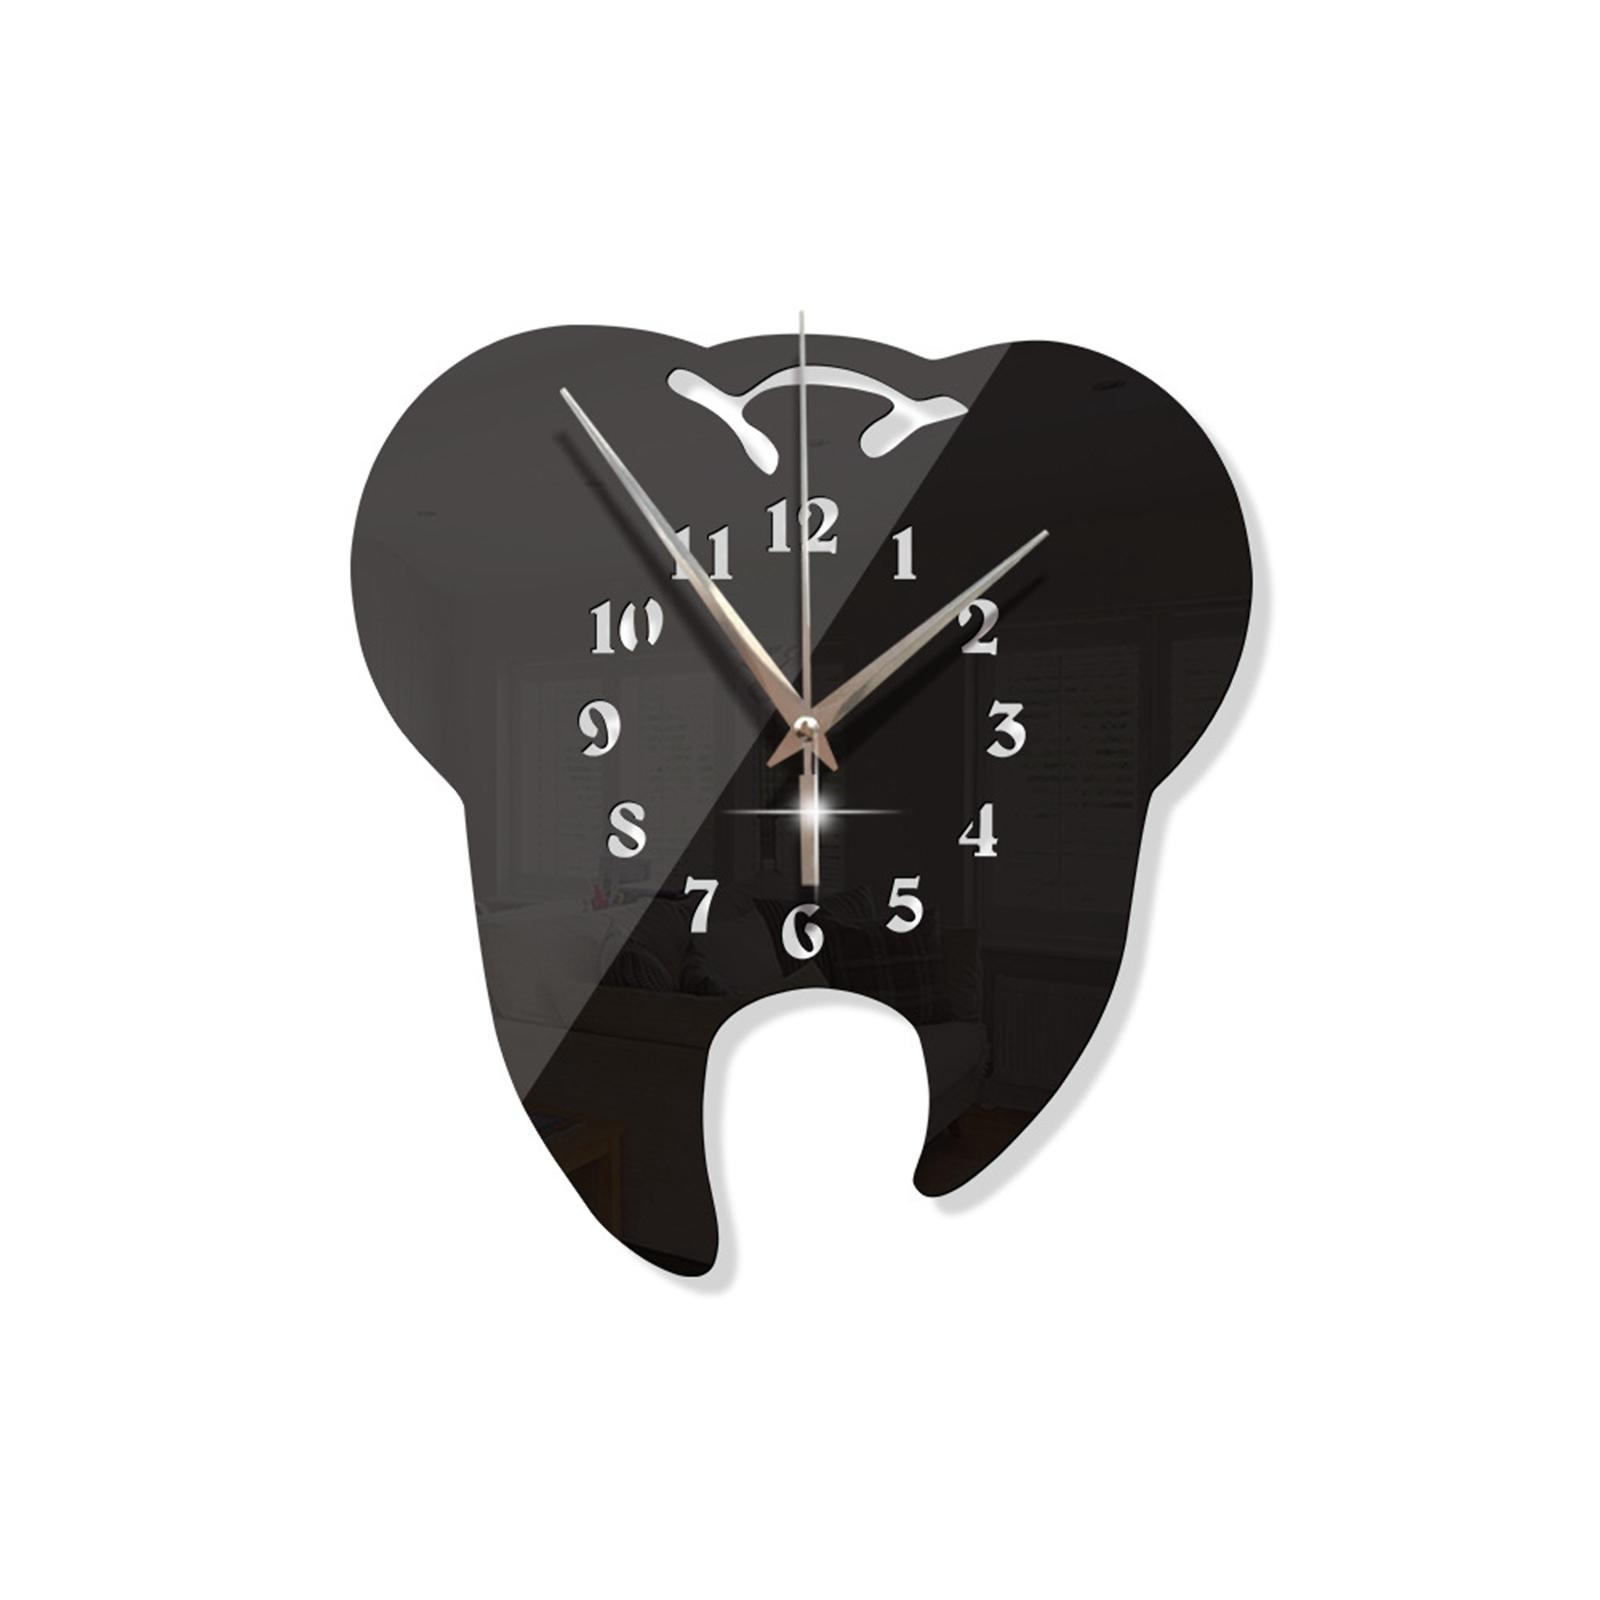 Modern Acrylic Wall Clocks Silent Decorative for Kitchen Office Black